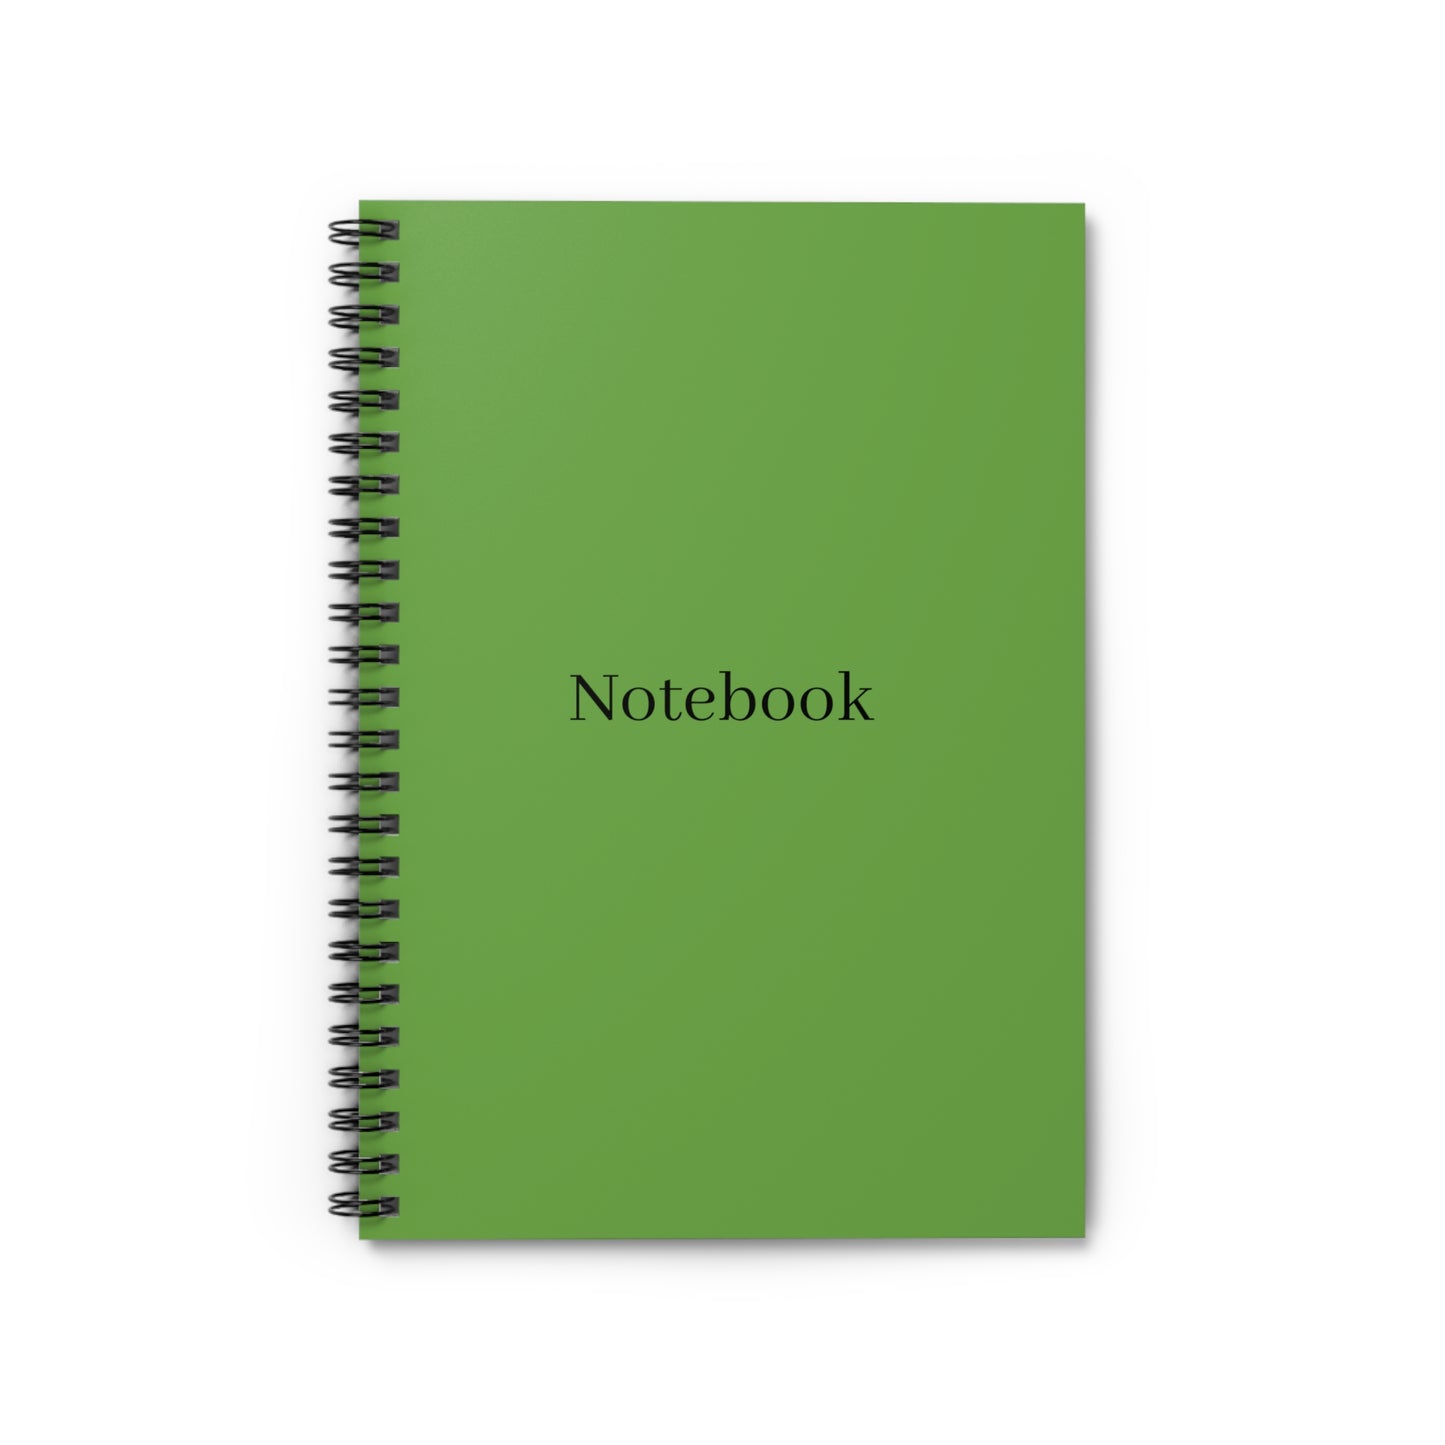 Green Spiral Notebook - Ruled Line